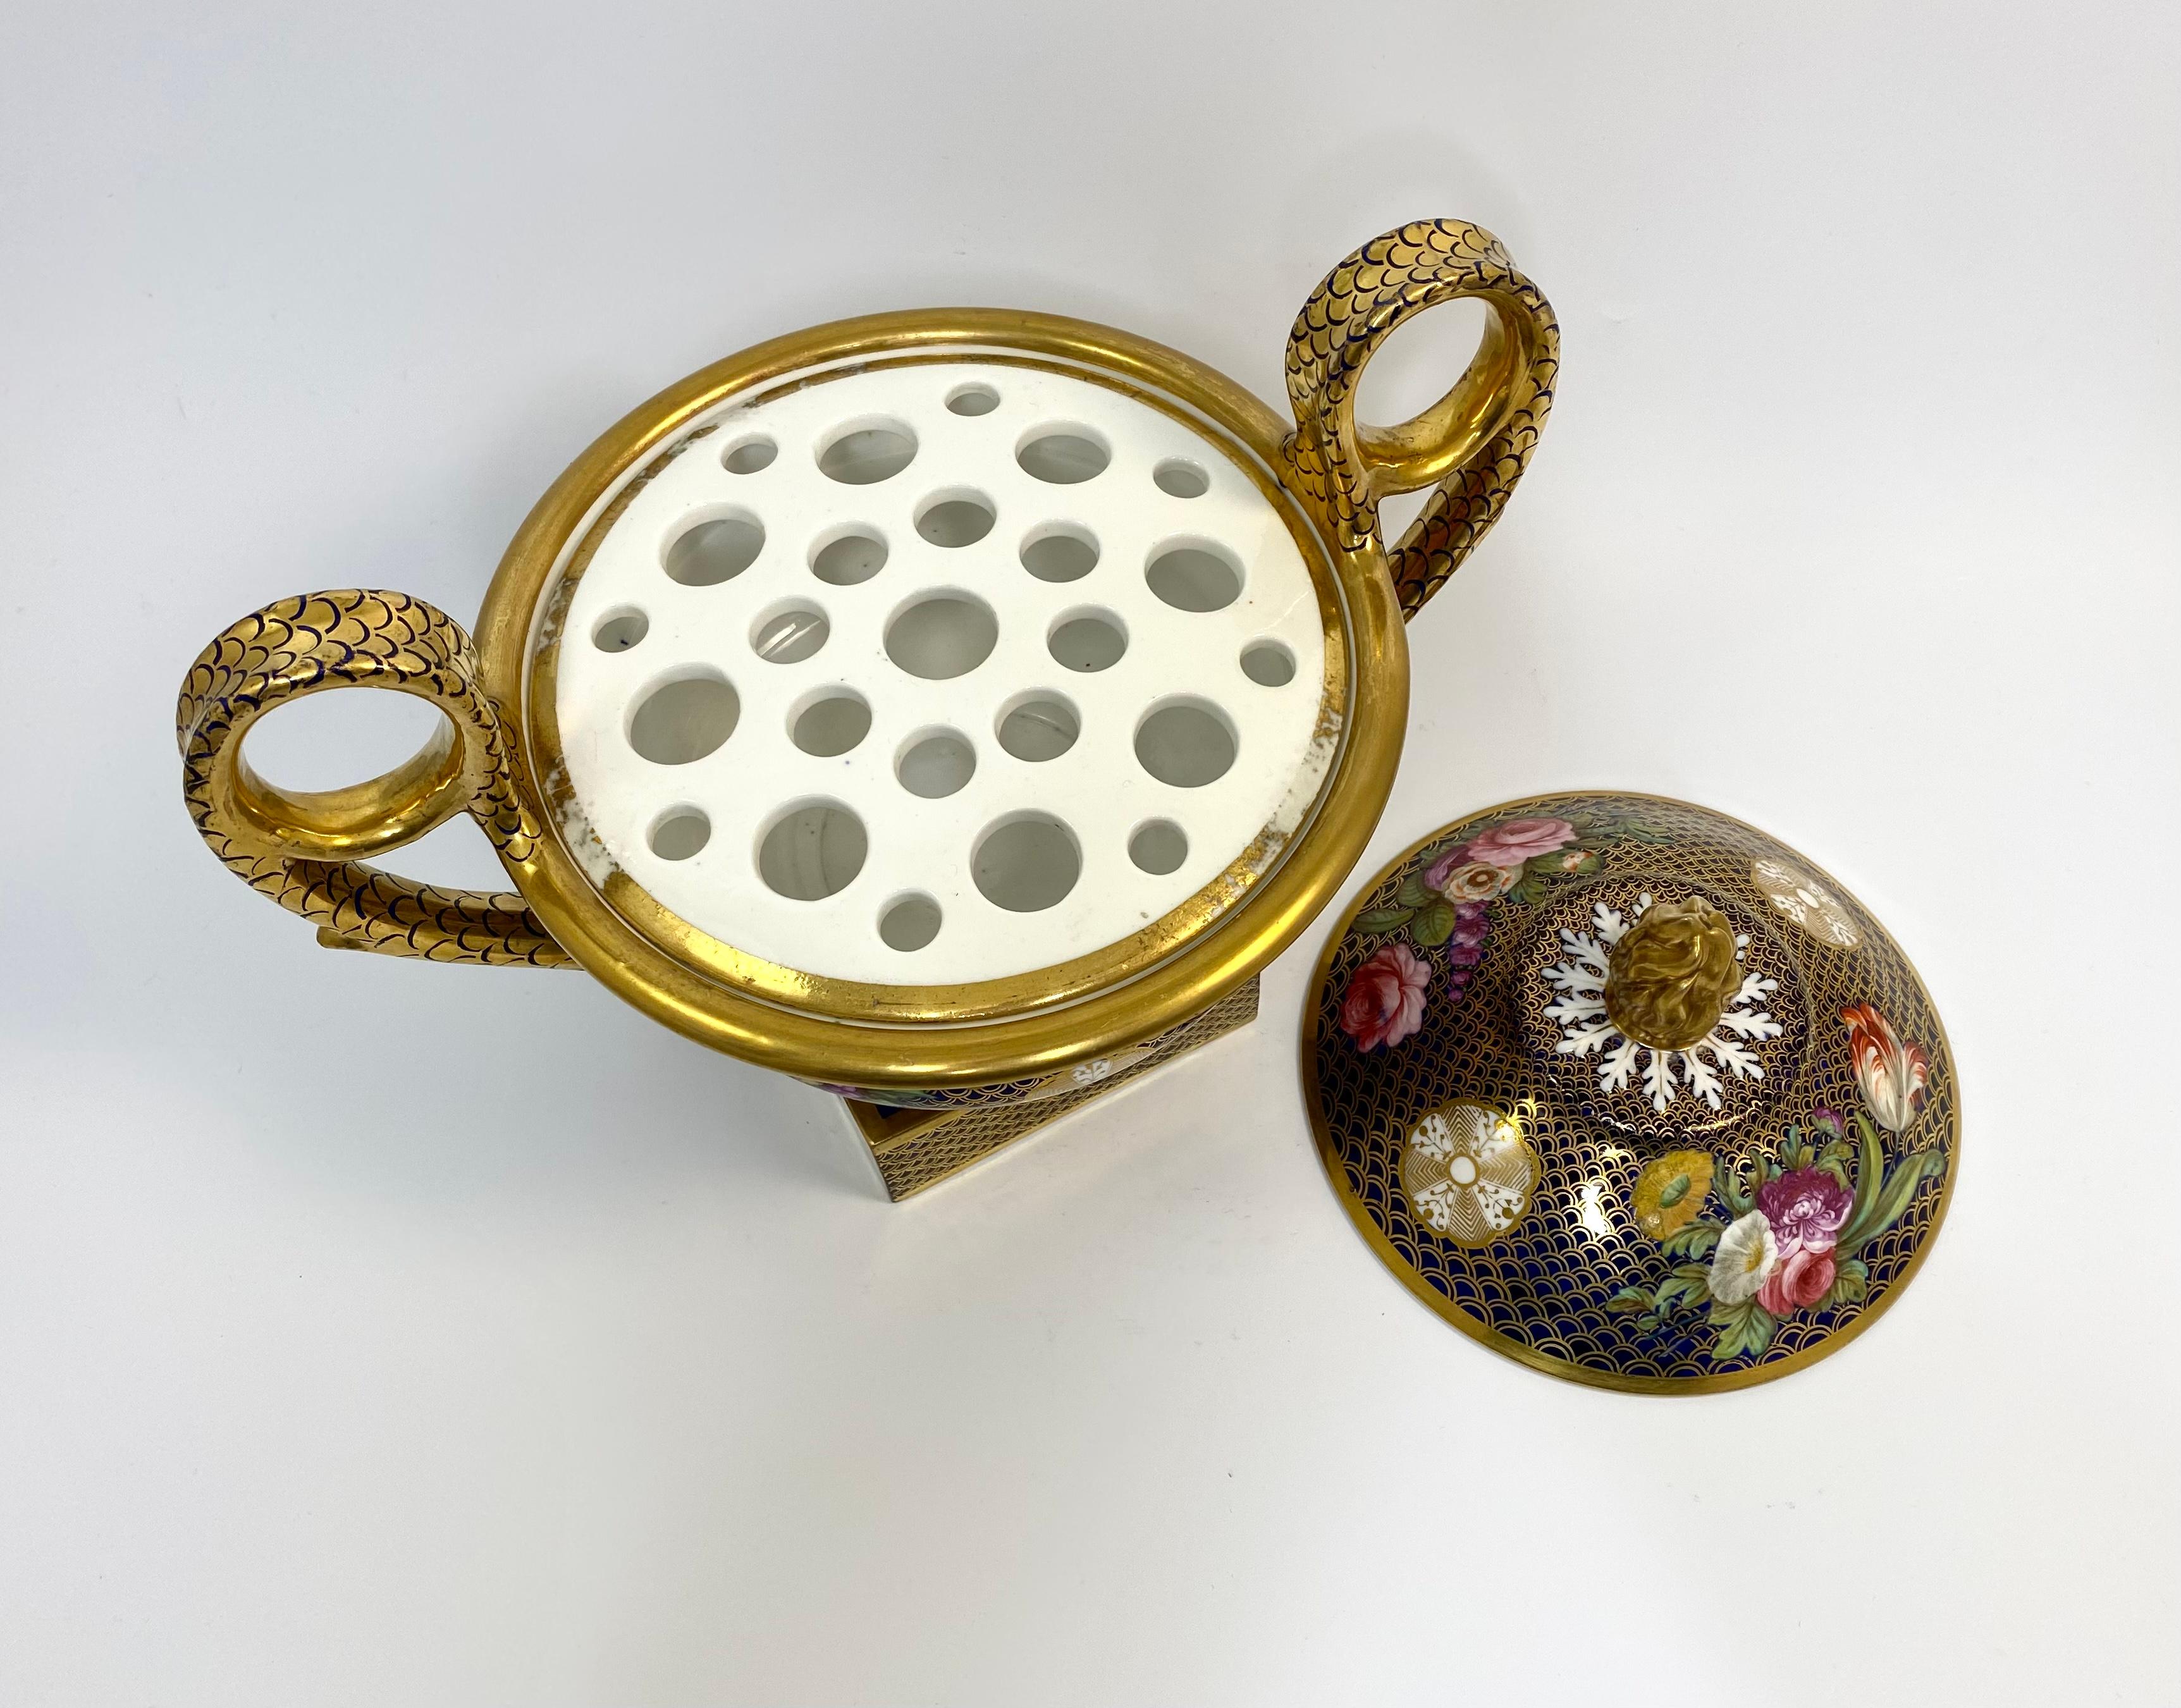 Spode porcelain pot pourri and cover, ‘1166’ pattern, c. 1820. 7